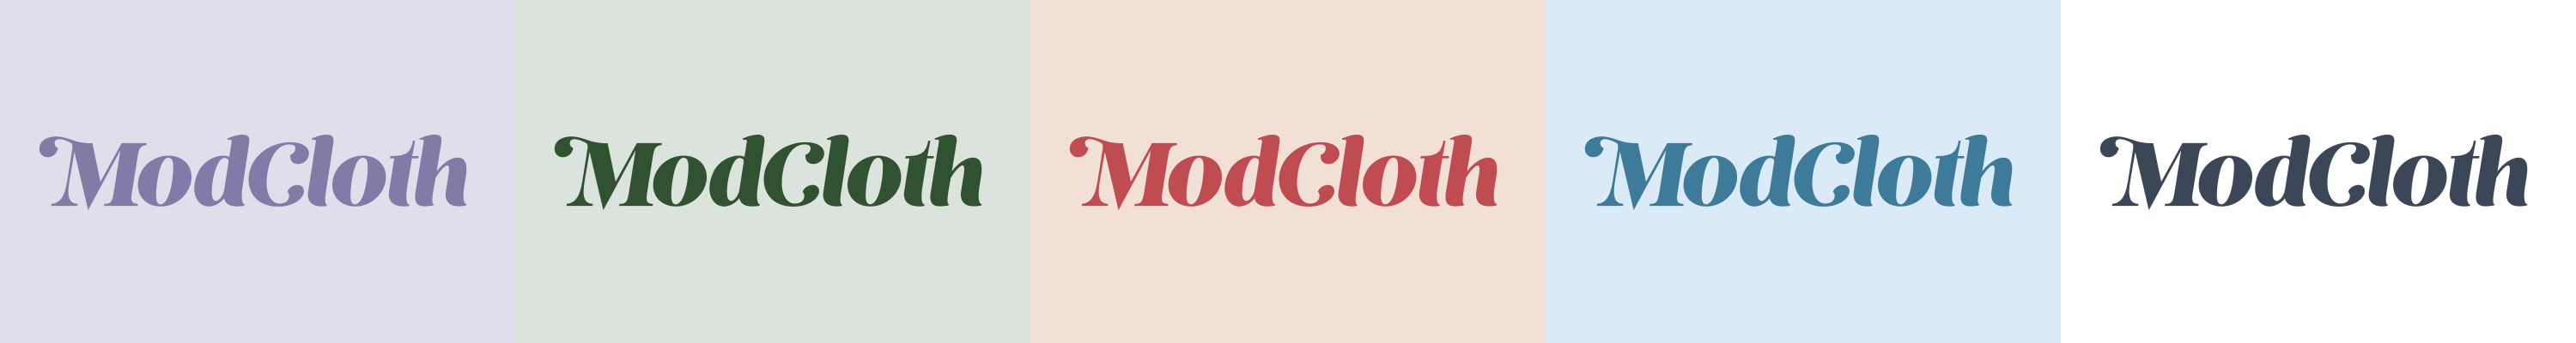 ModCloth Against the Current Color Palette